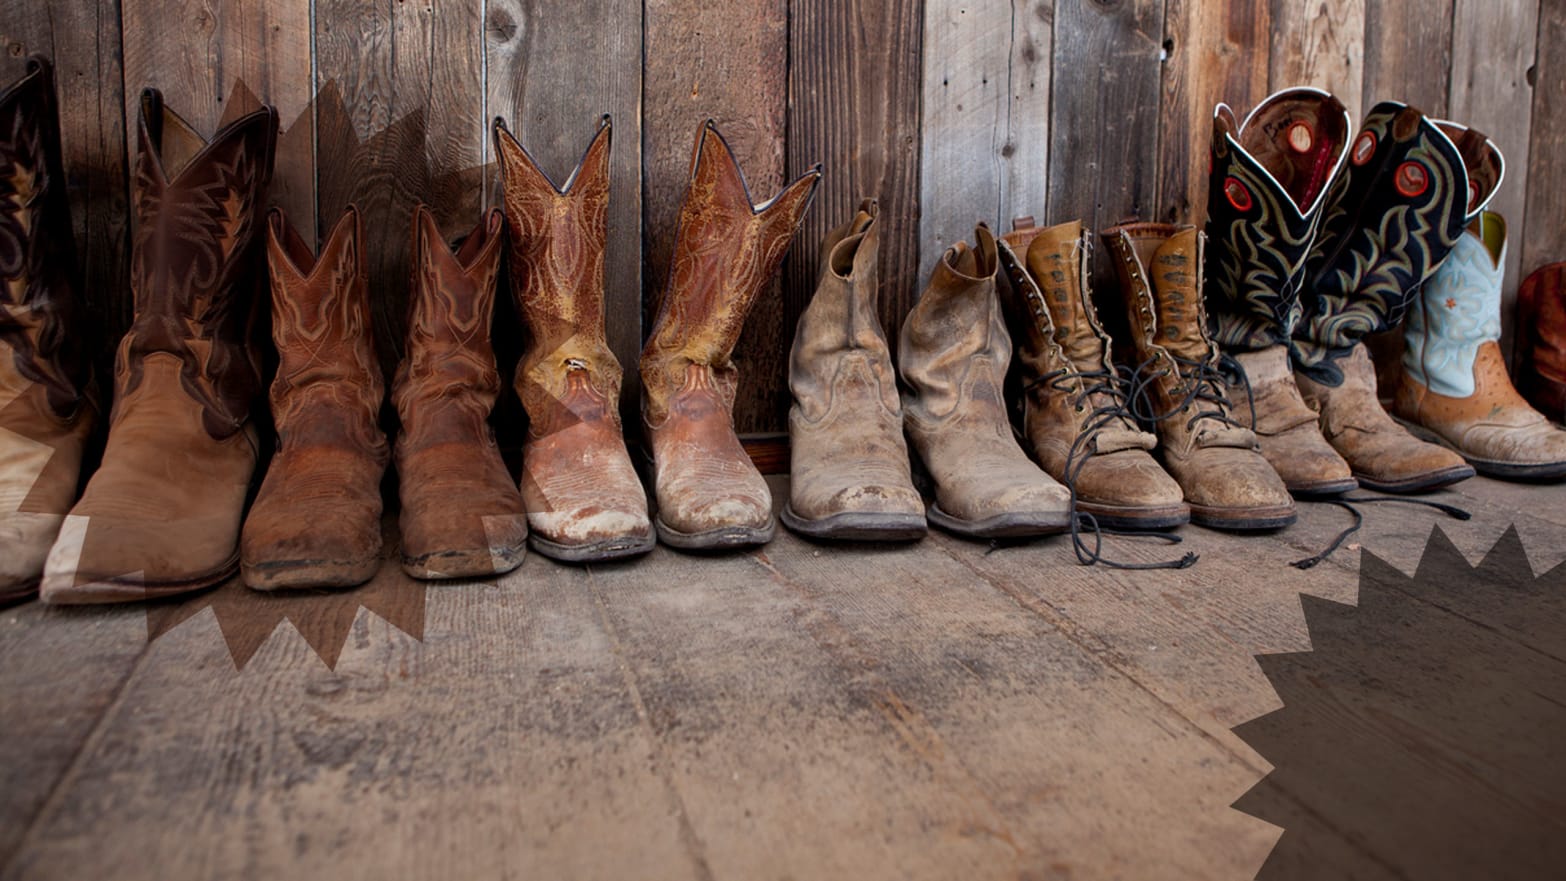 Best Cowboy Boots Brands